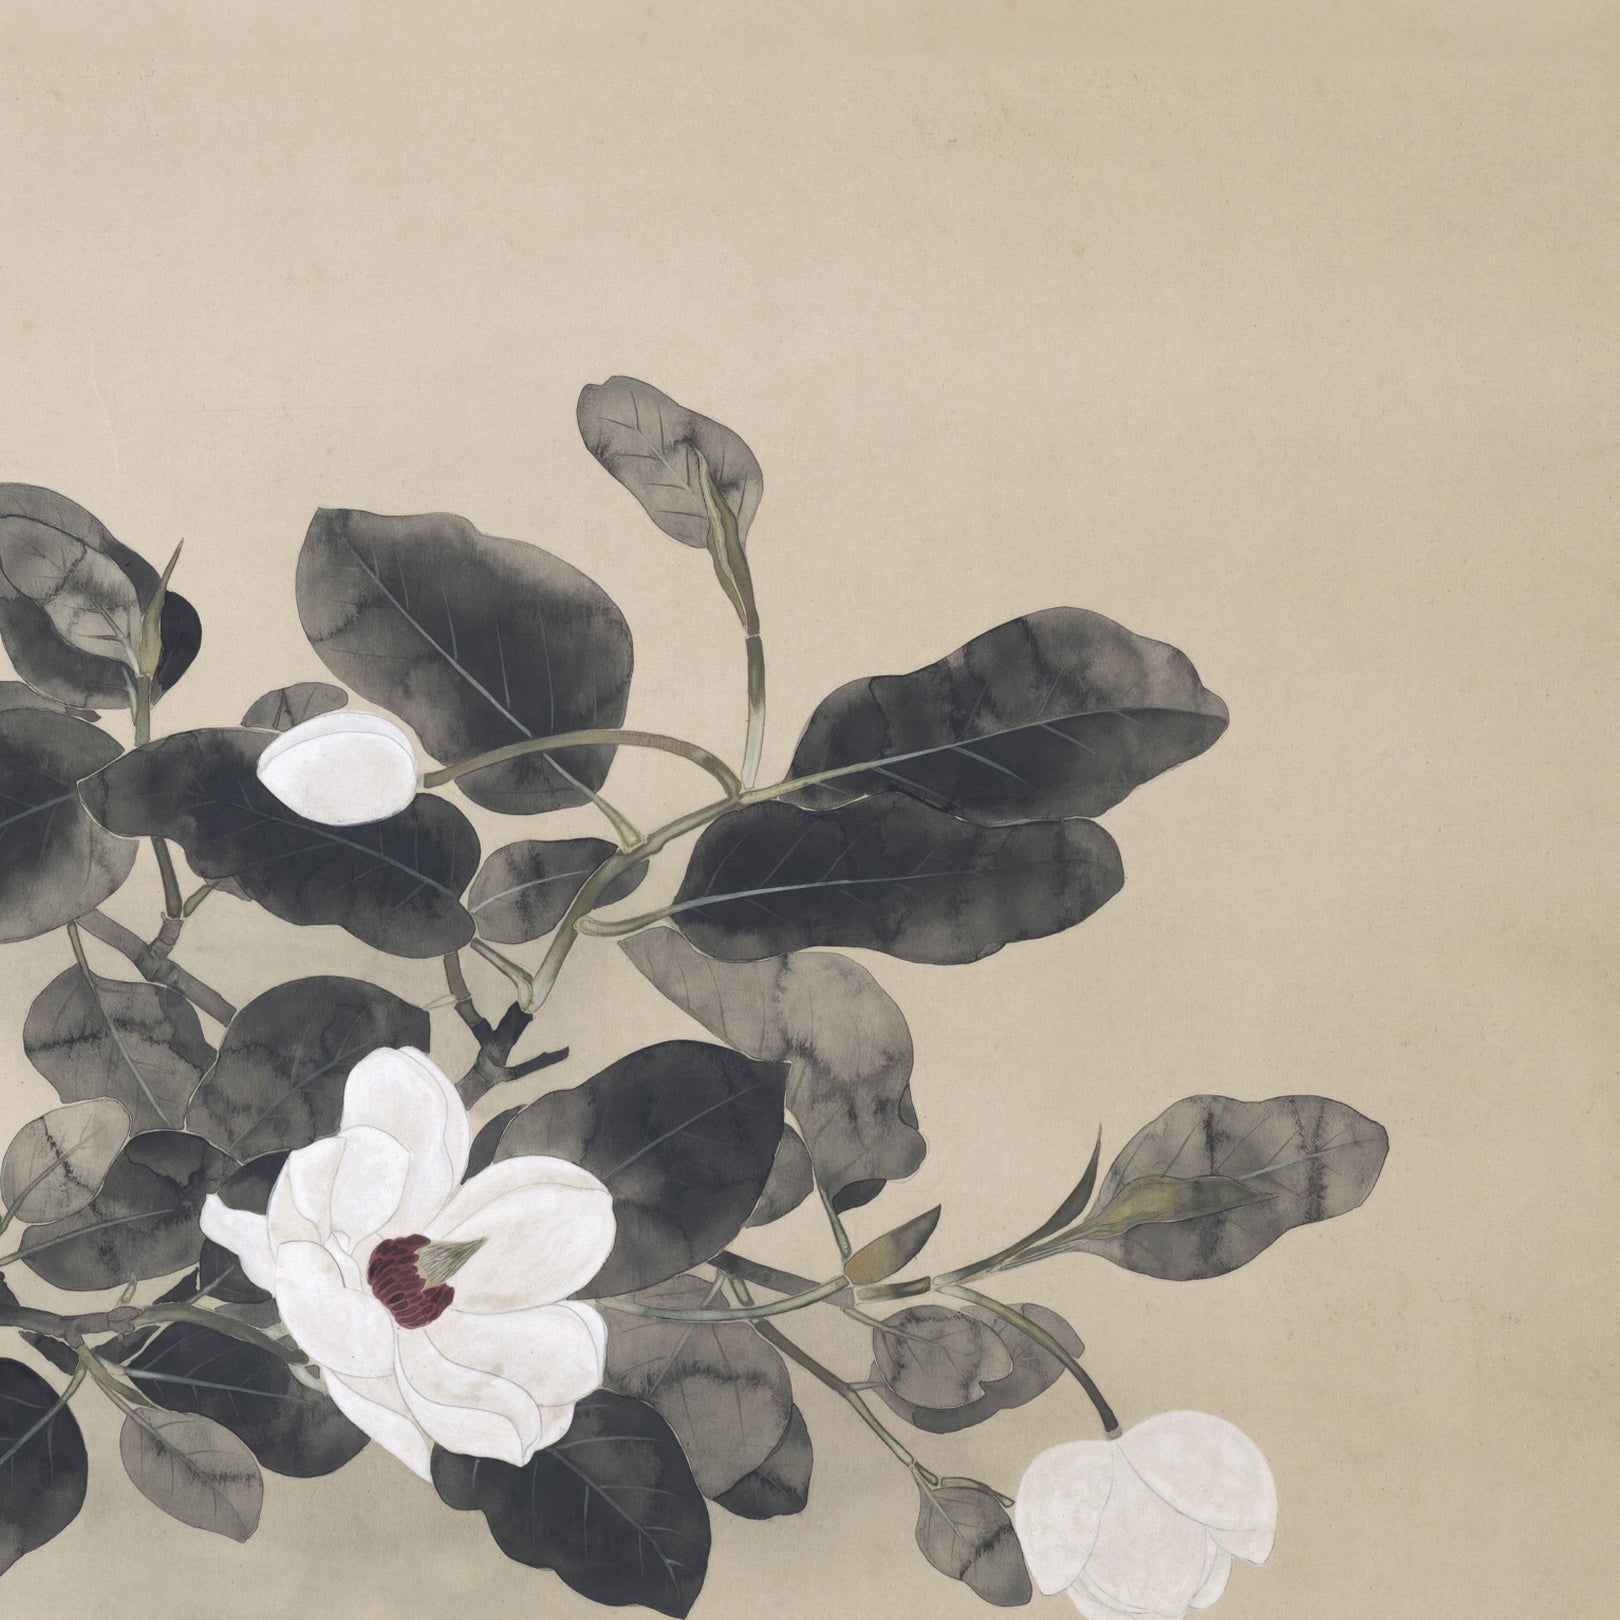 Japanese Magnolia print from Attica Press